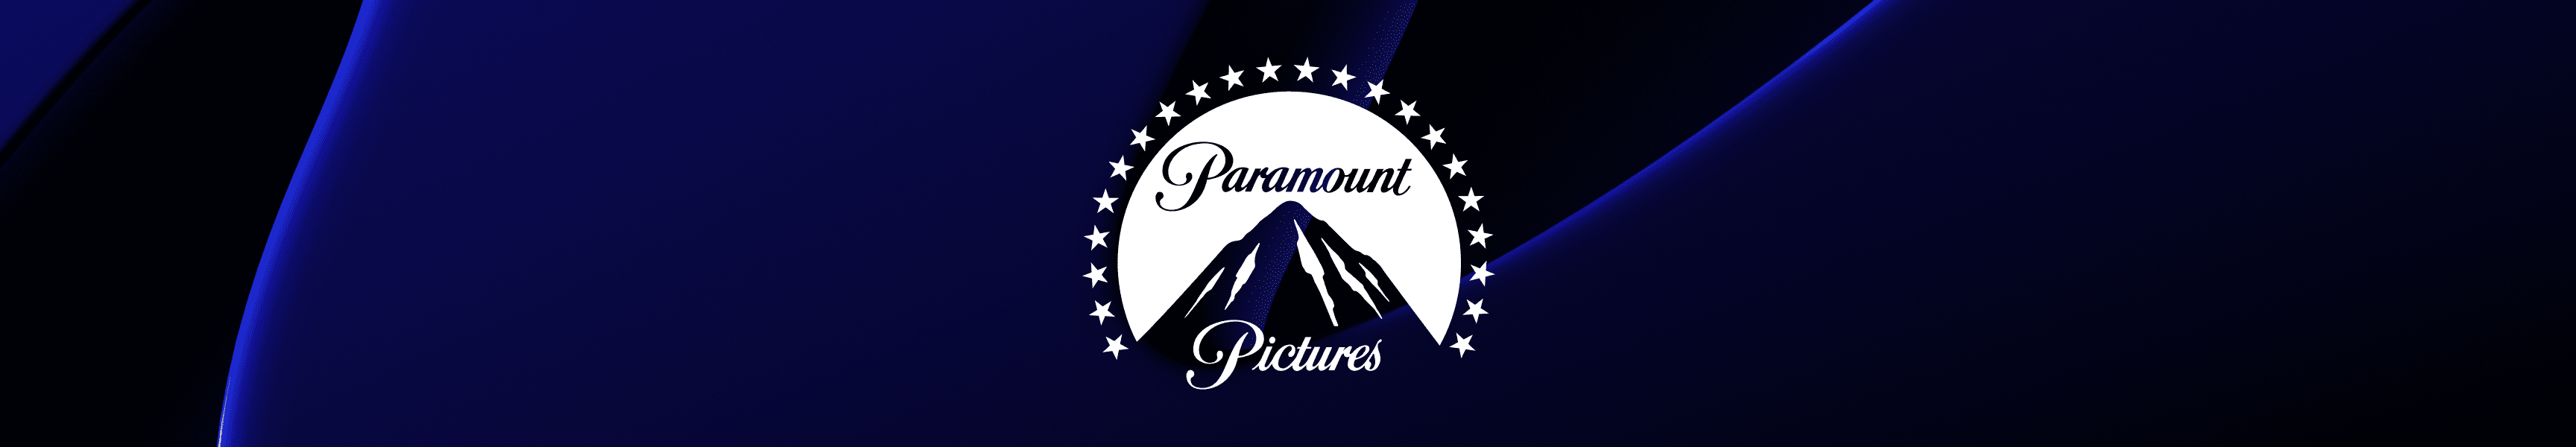 Paramount Pictures Posavasos